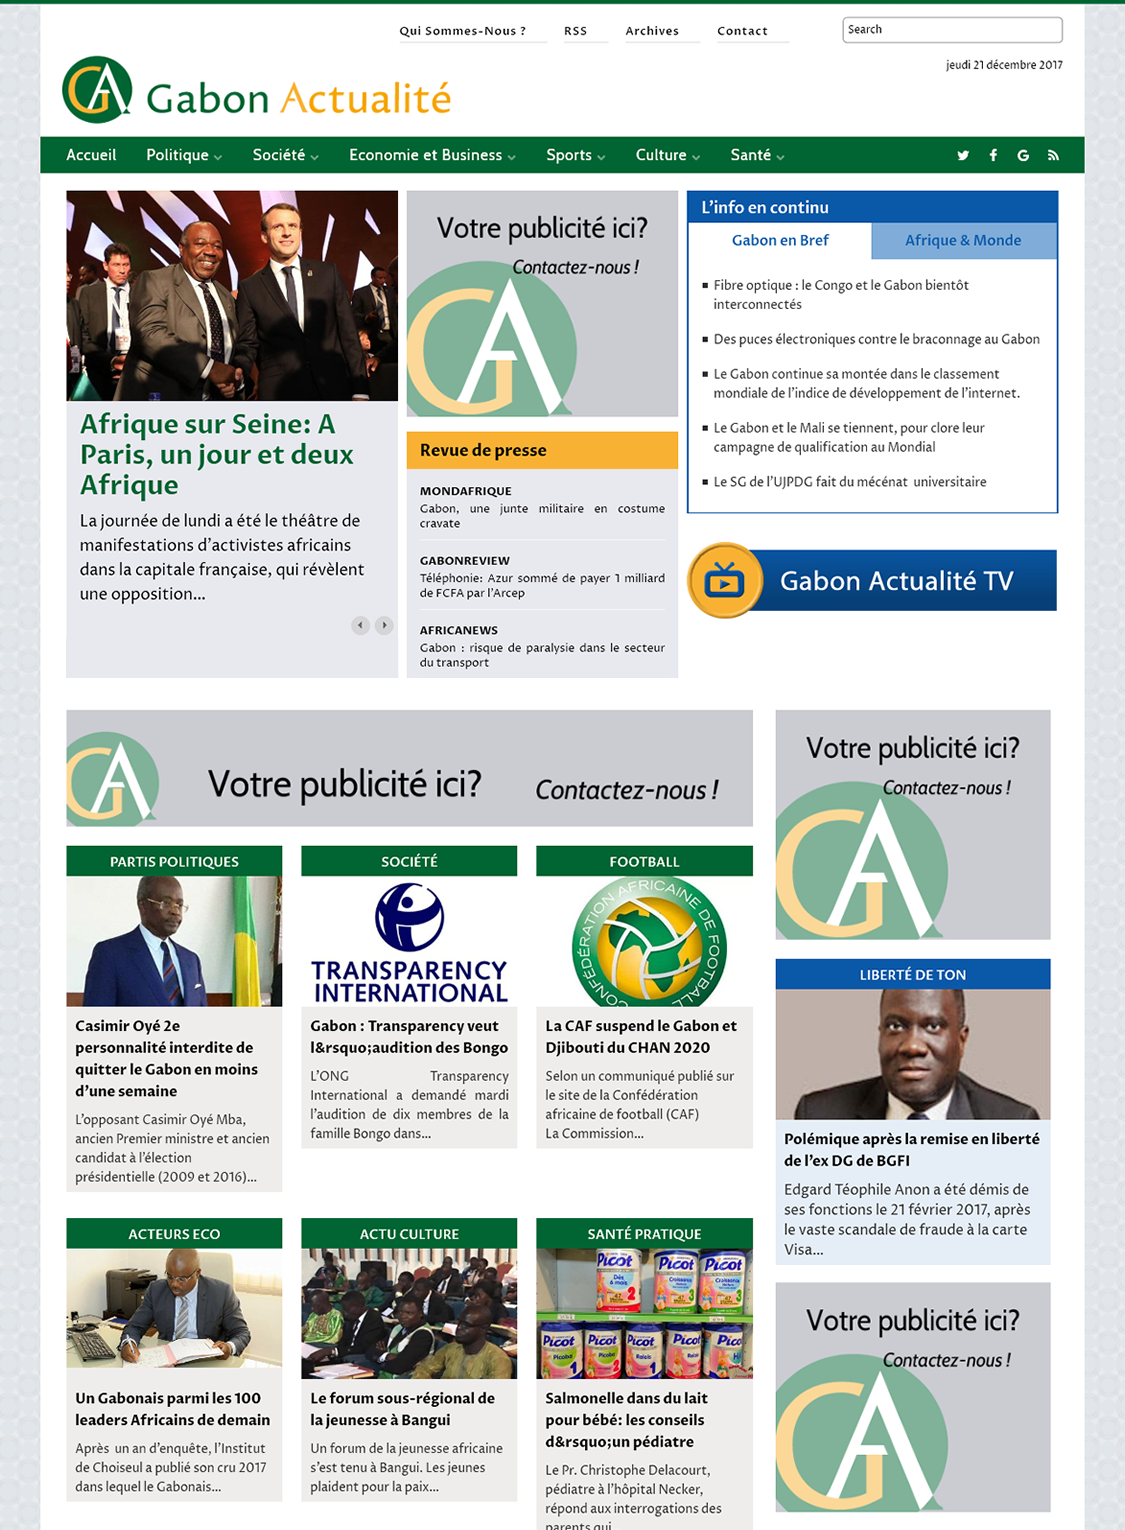 Gabon Actualité